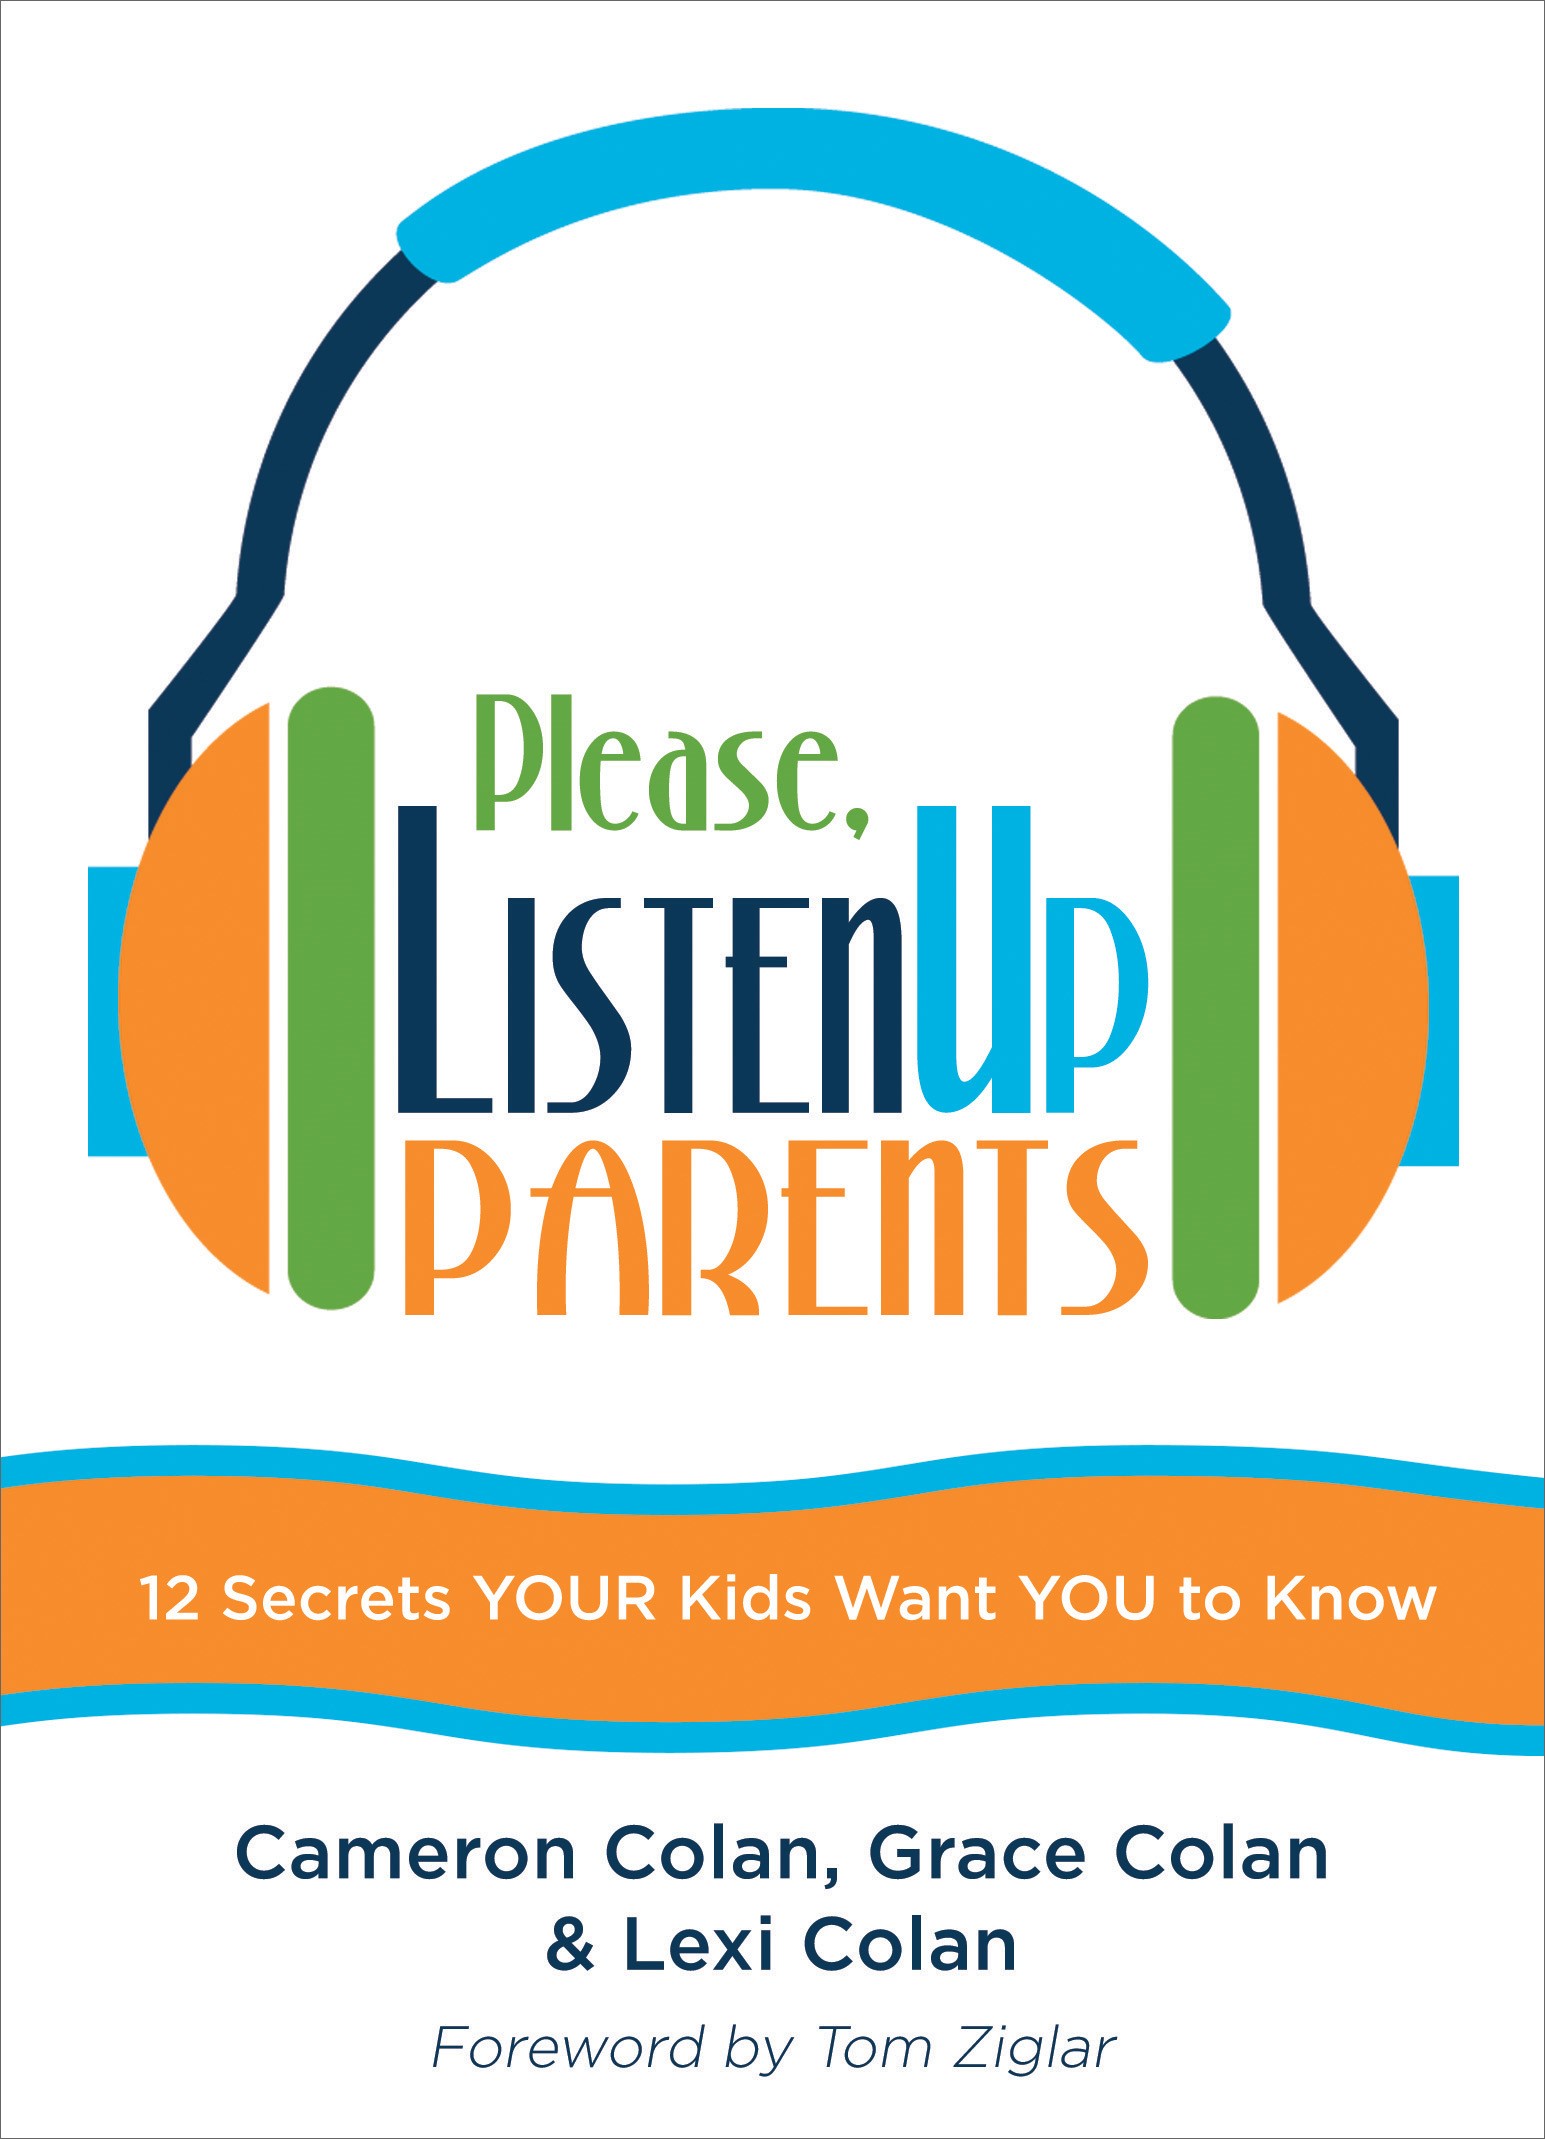 Please-Listen-Up-Parents-book-cover.jpg